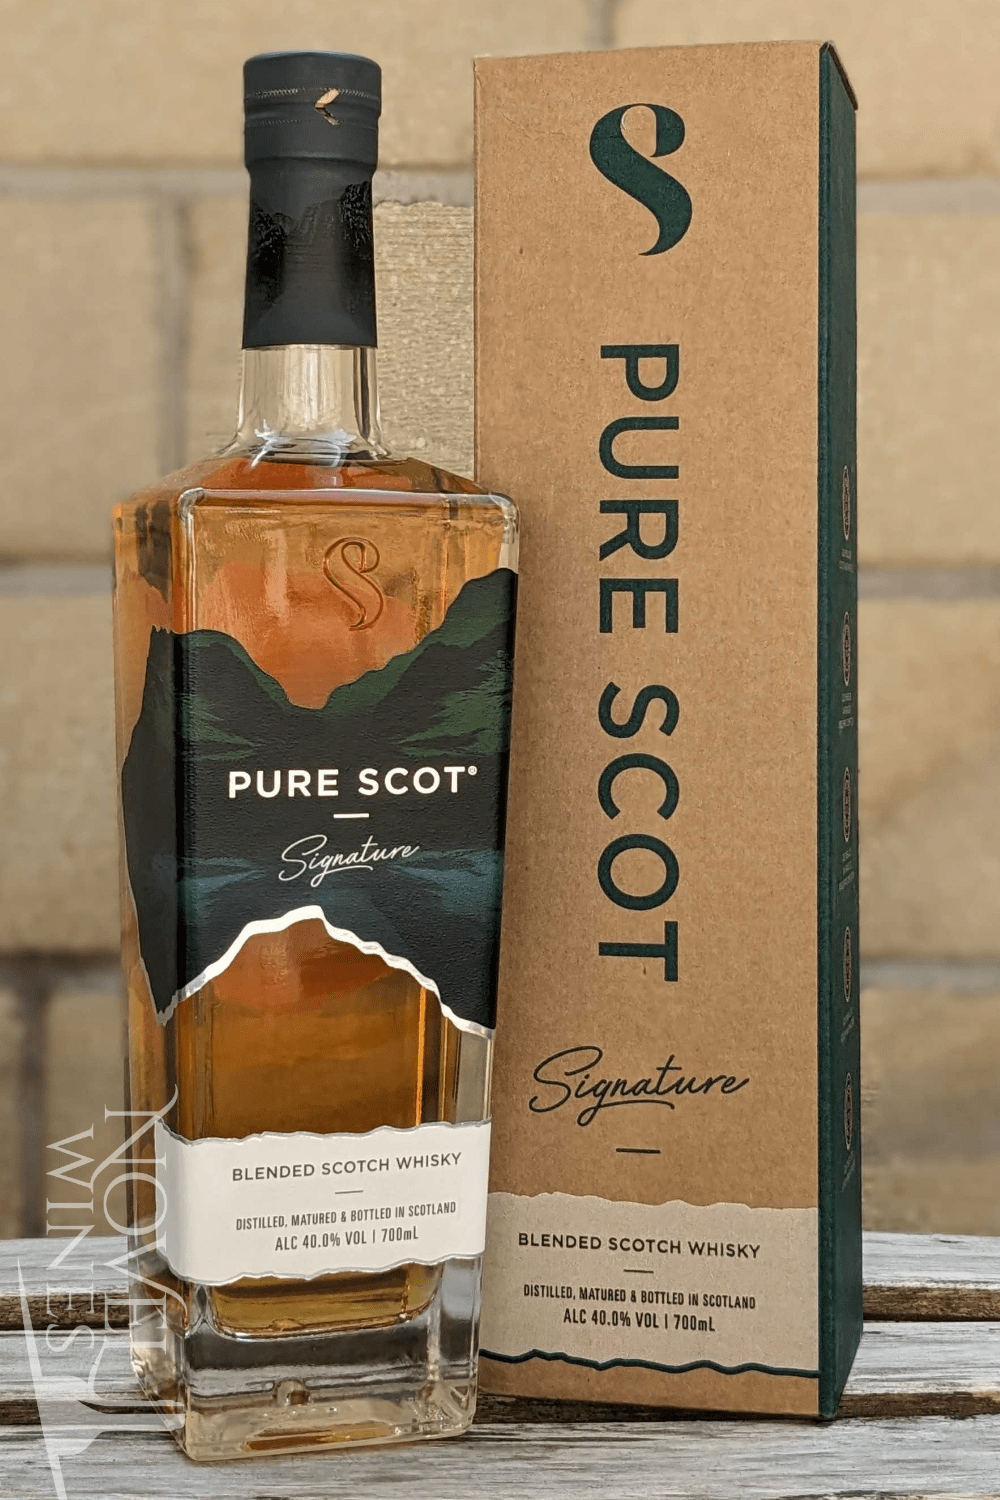 Bladnoch Whisky Pure Scot Signature Original Whisky 40.0% abv, Scotland